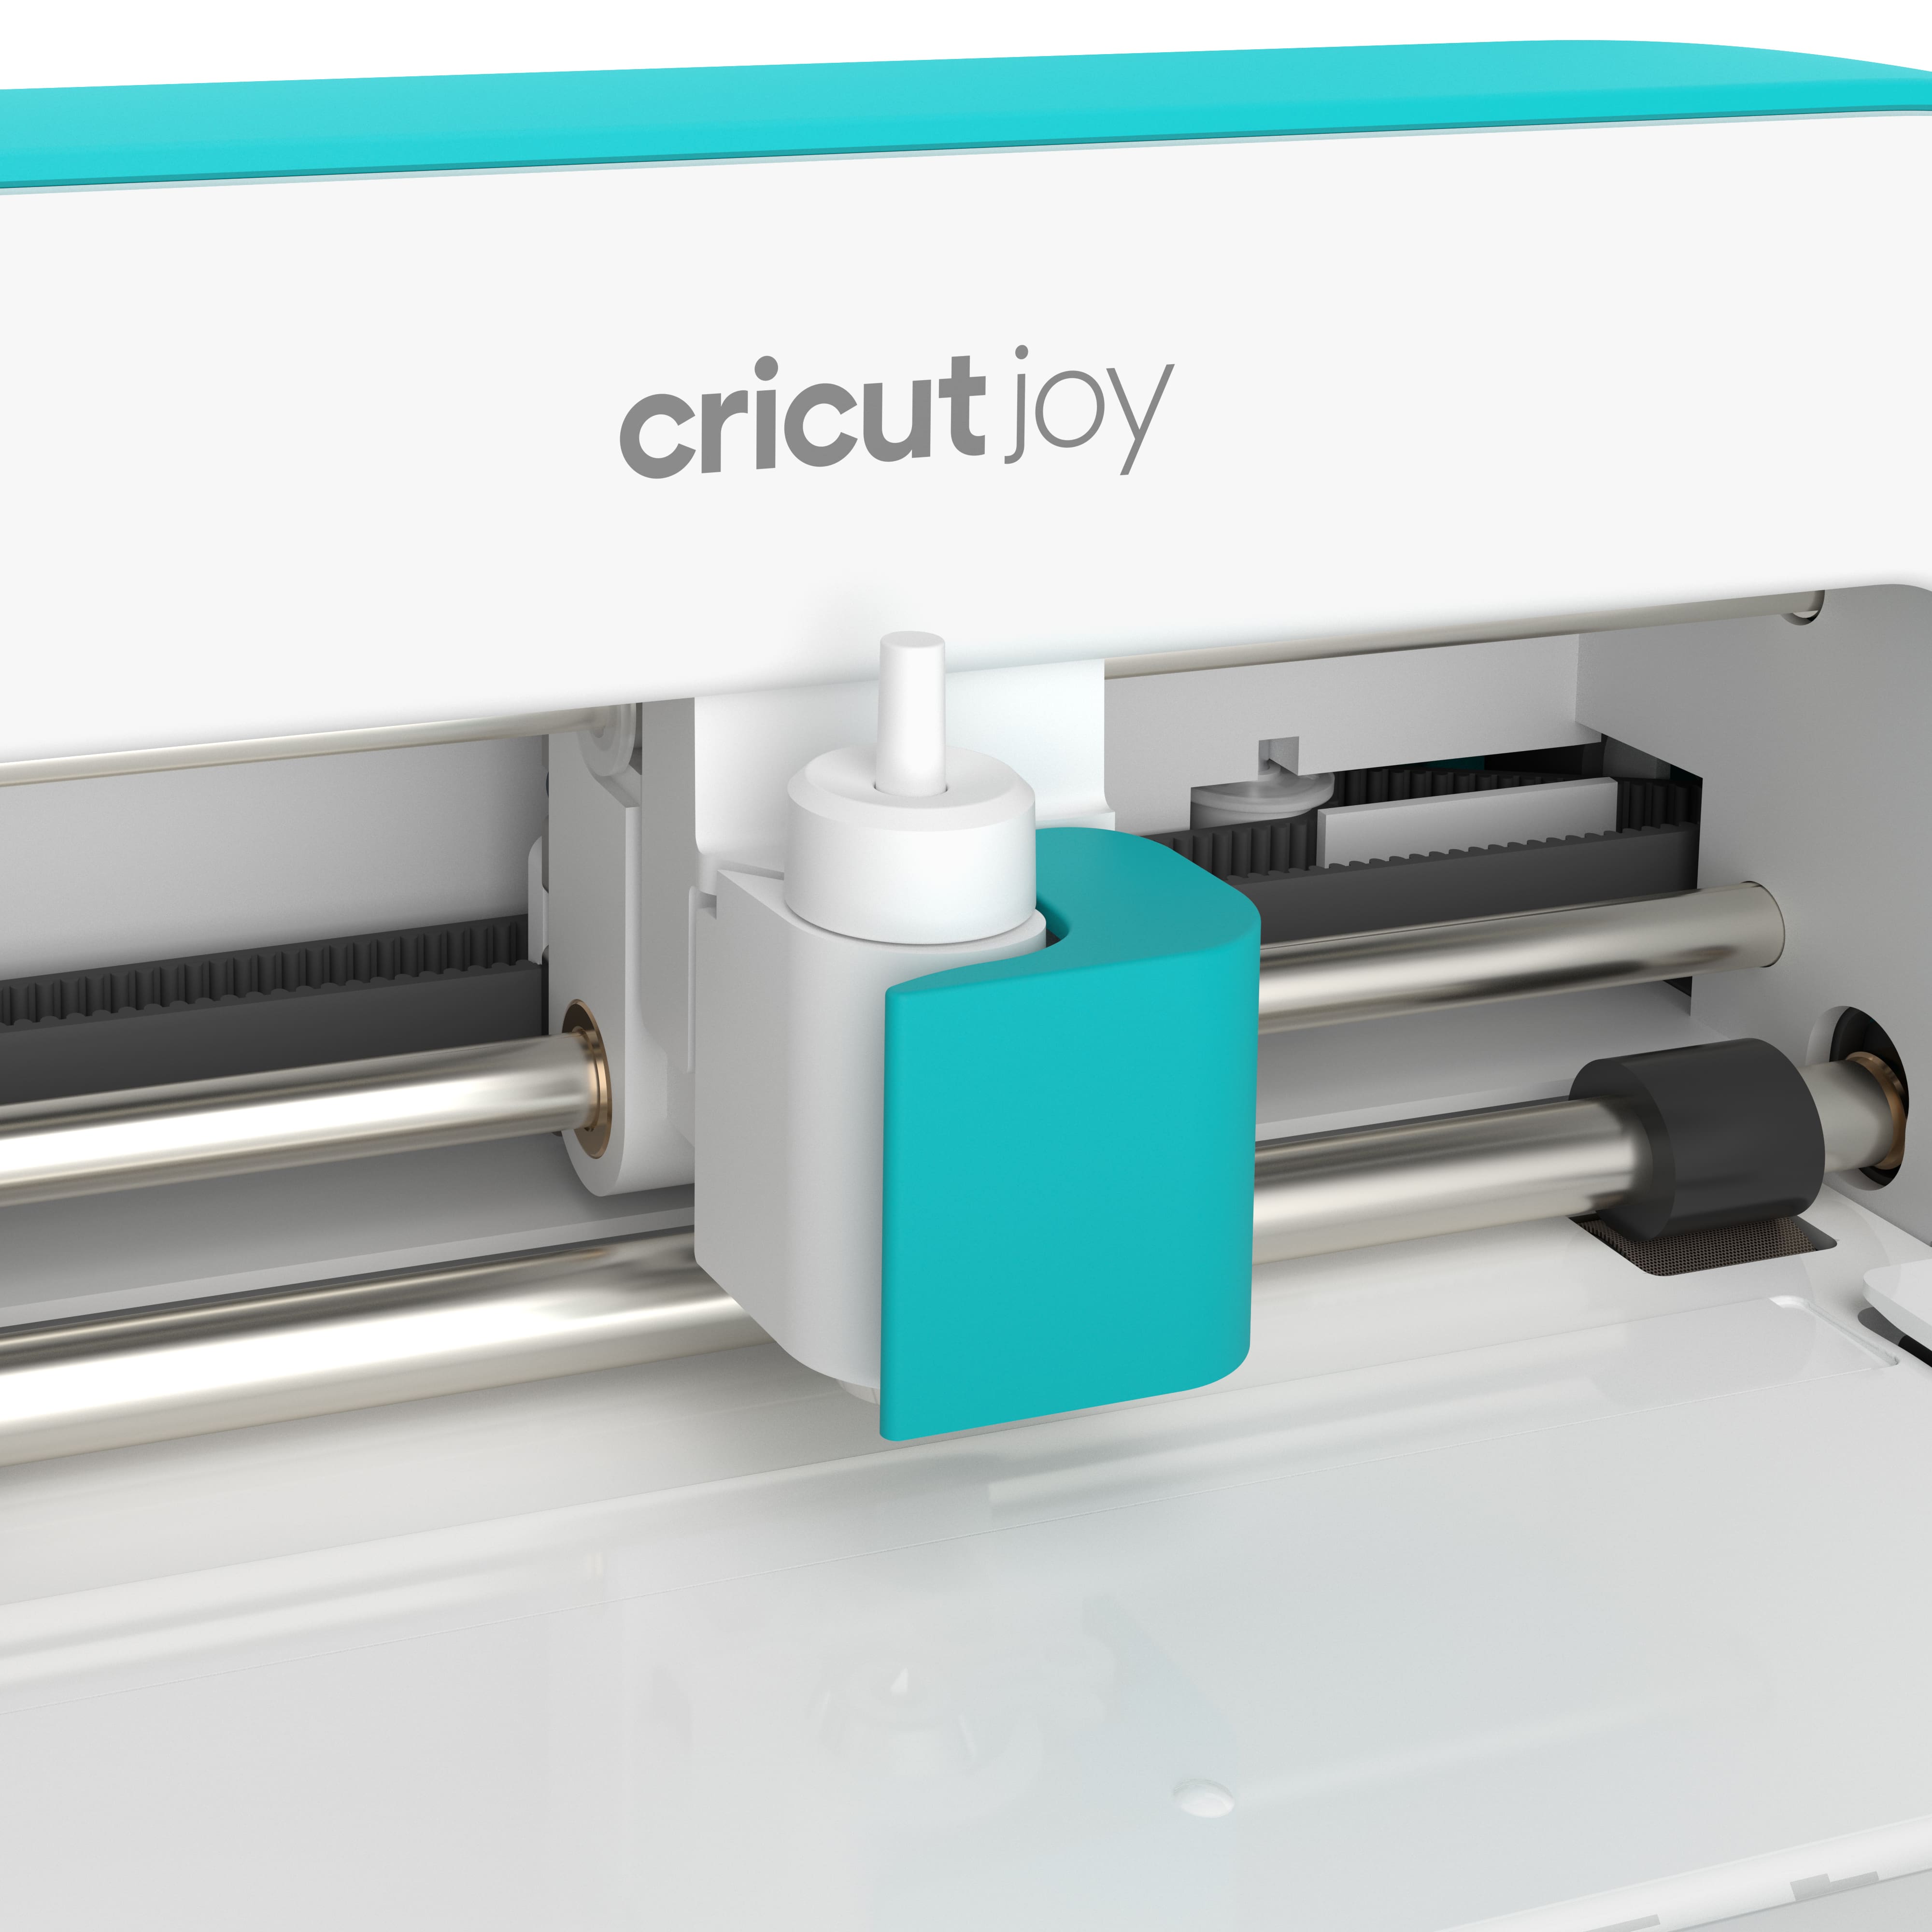 Cricut Joy™ Tote - Gray Craft Machine Case, Portable, Wi-Fi Compatible, Indoor Use, Padded Interior